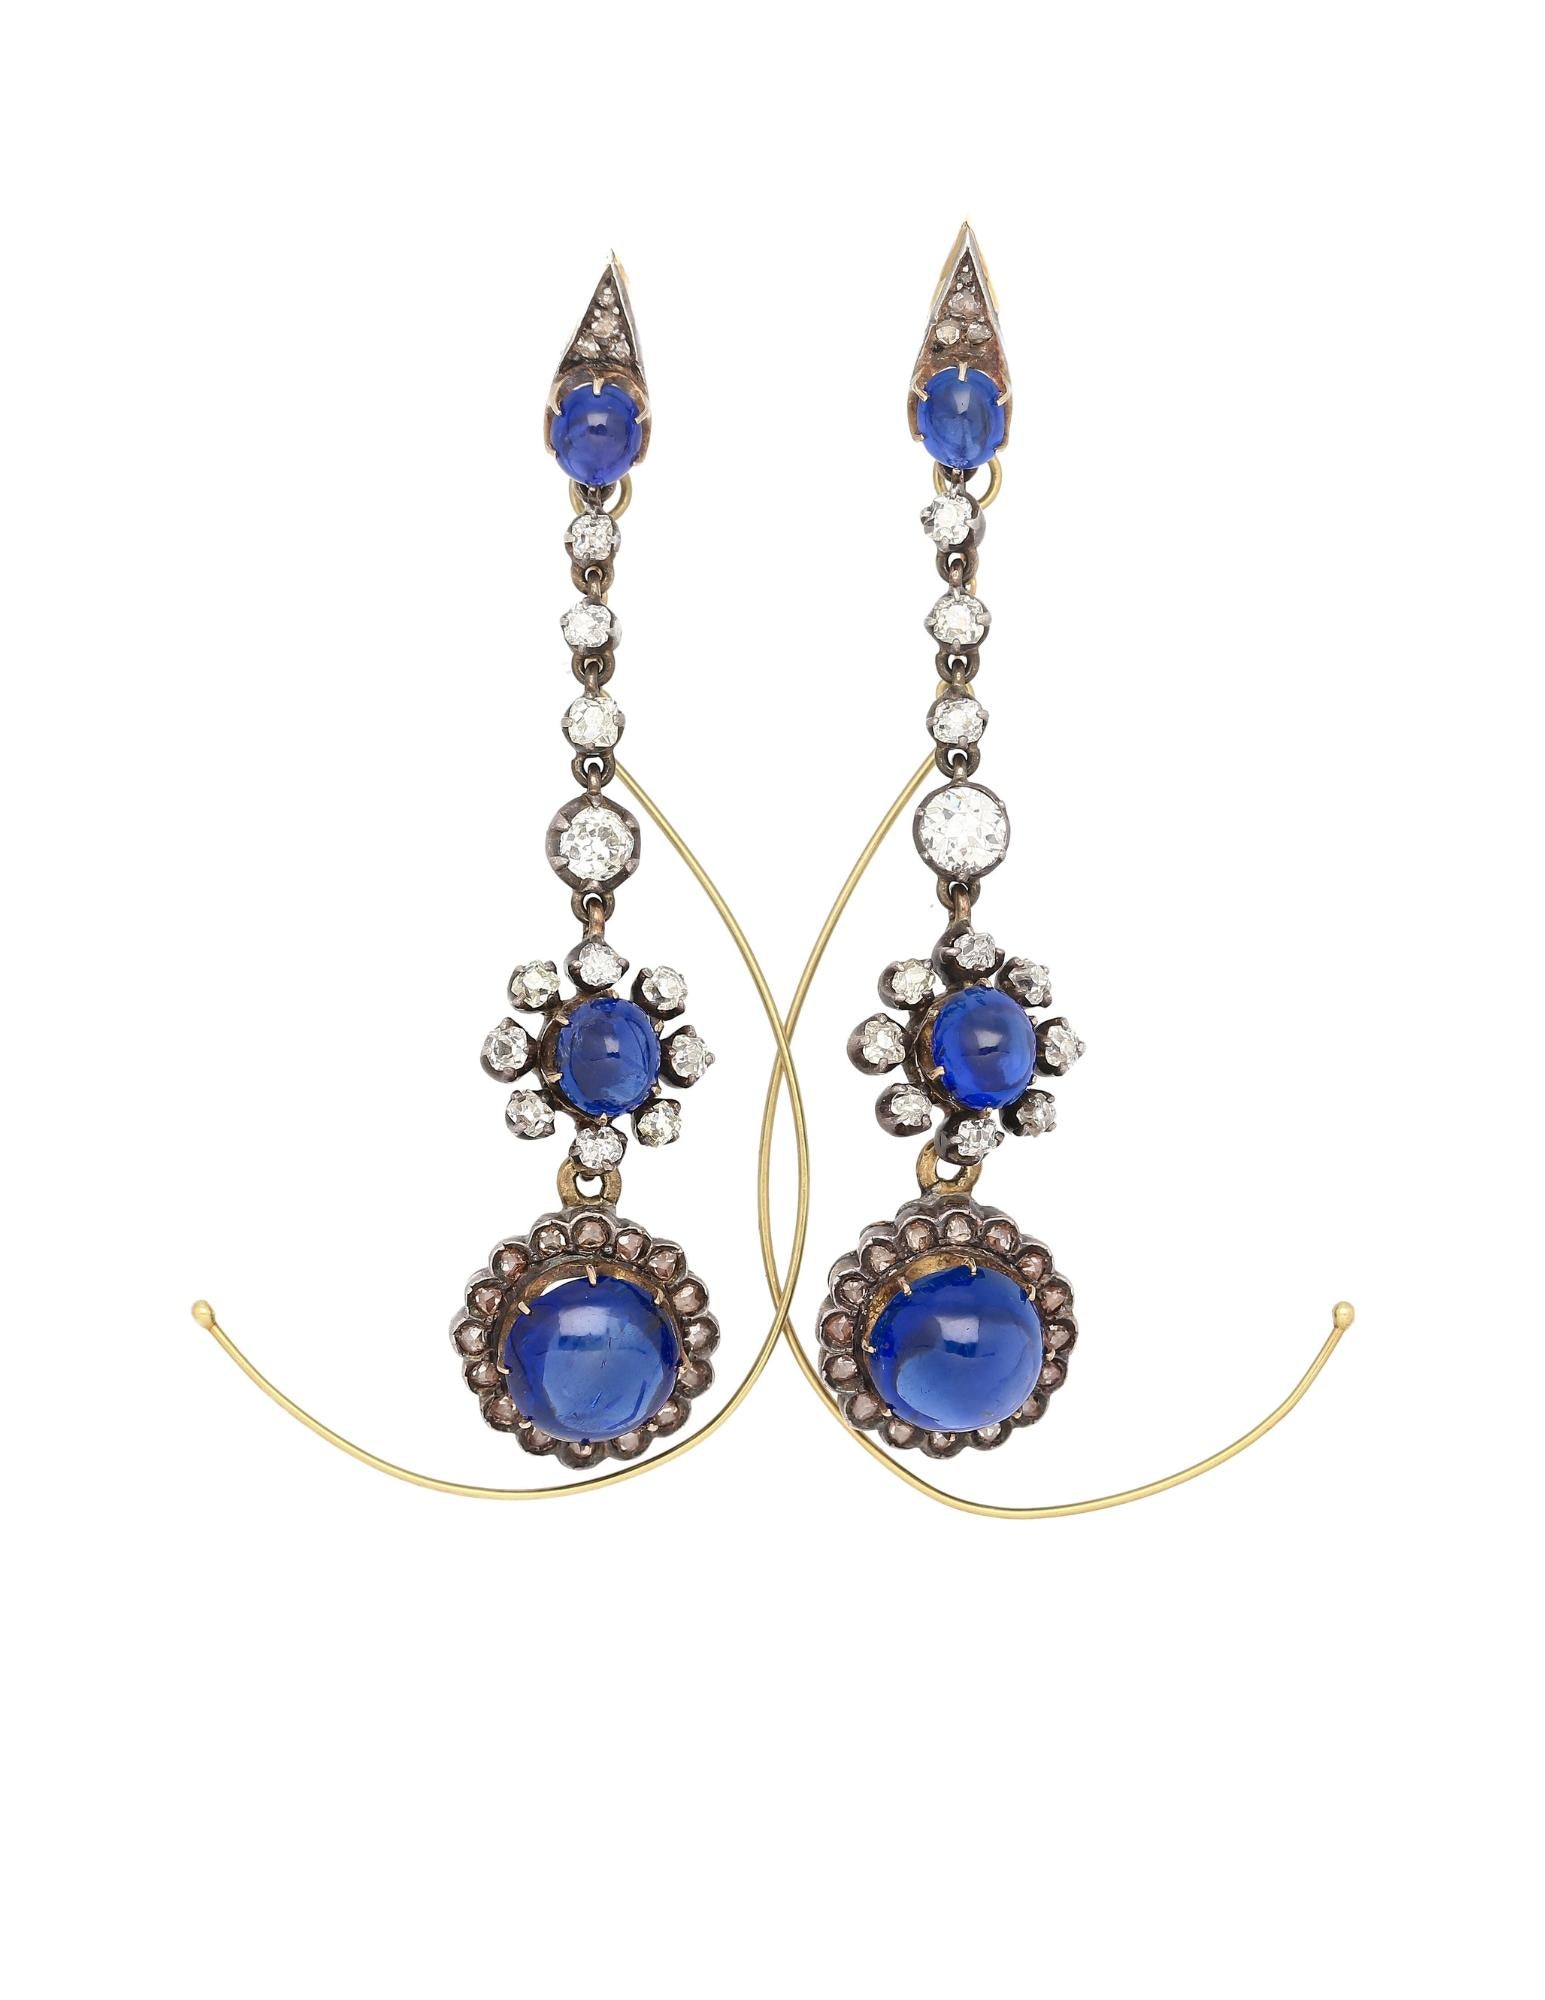 ~16 Carat Cabochon Cut Burma Sapphire AGL Certified and Diamond 14K Earrings